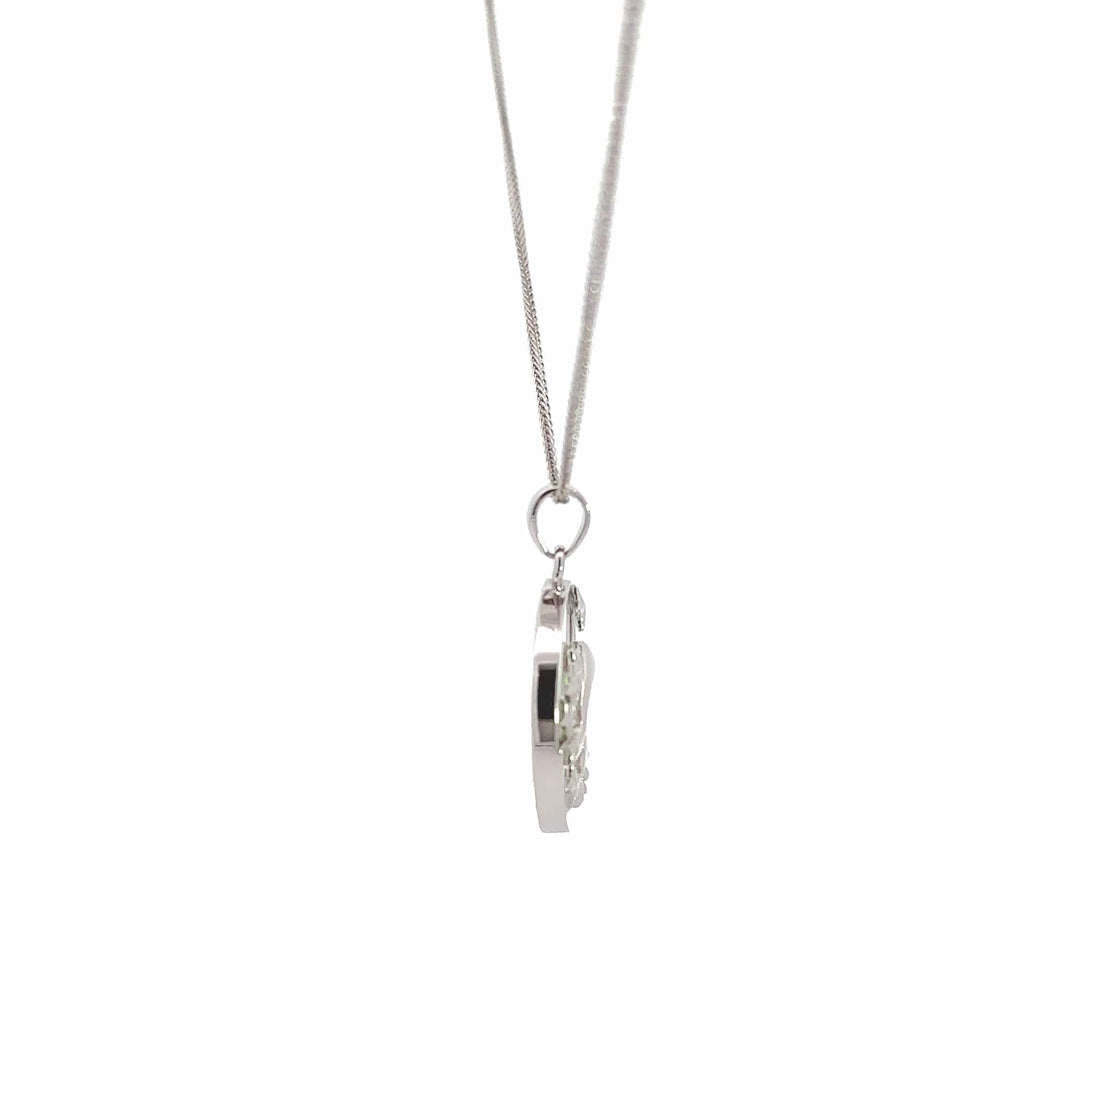 Baikalla Jewelry Gemstone Pendant Necklace Baikalla Sterling Silver Lab-Made Opal Star Dolphin Bezel Pendant Necklace